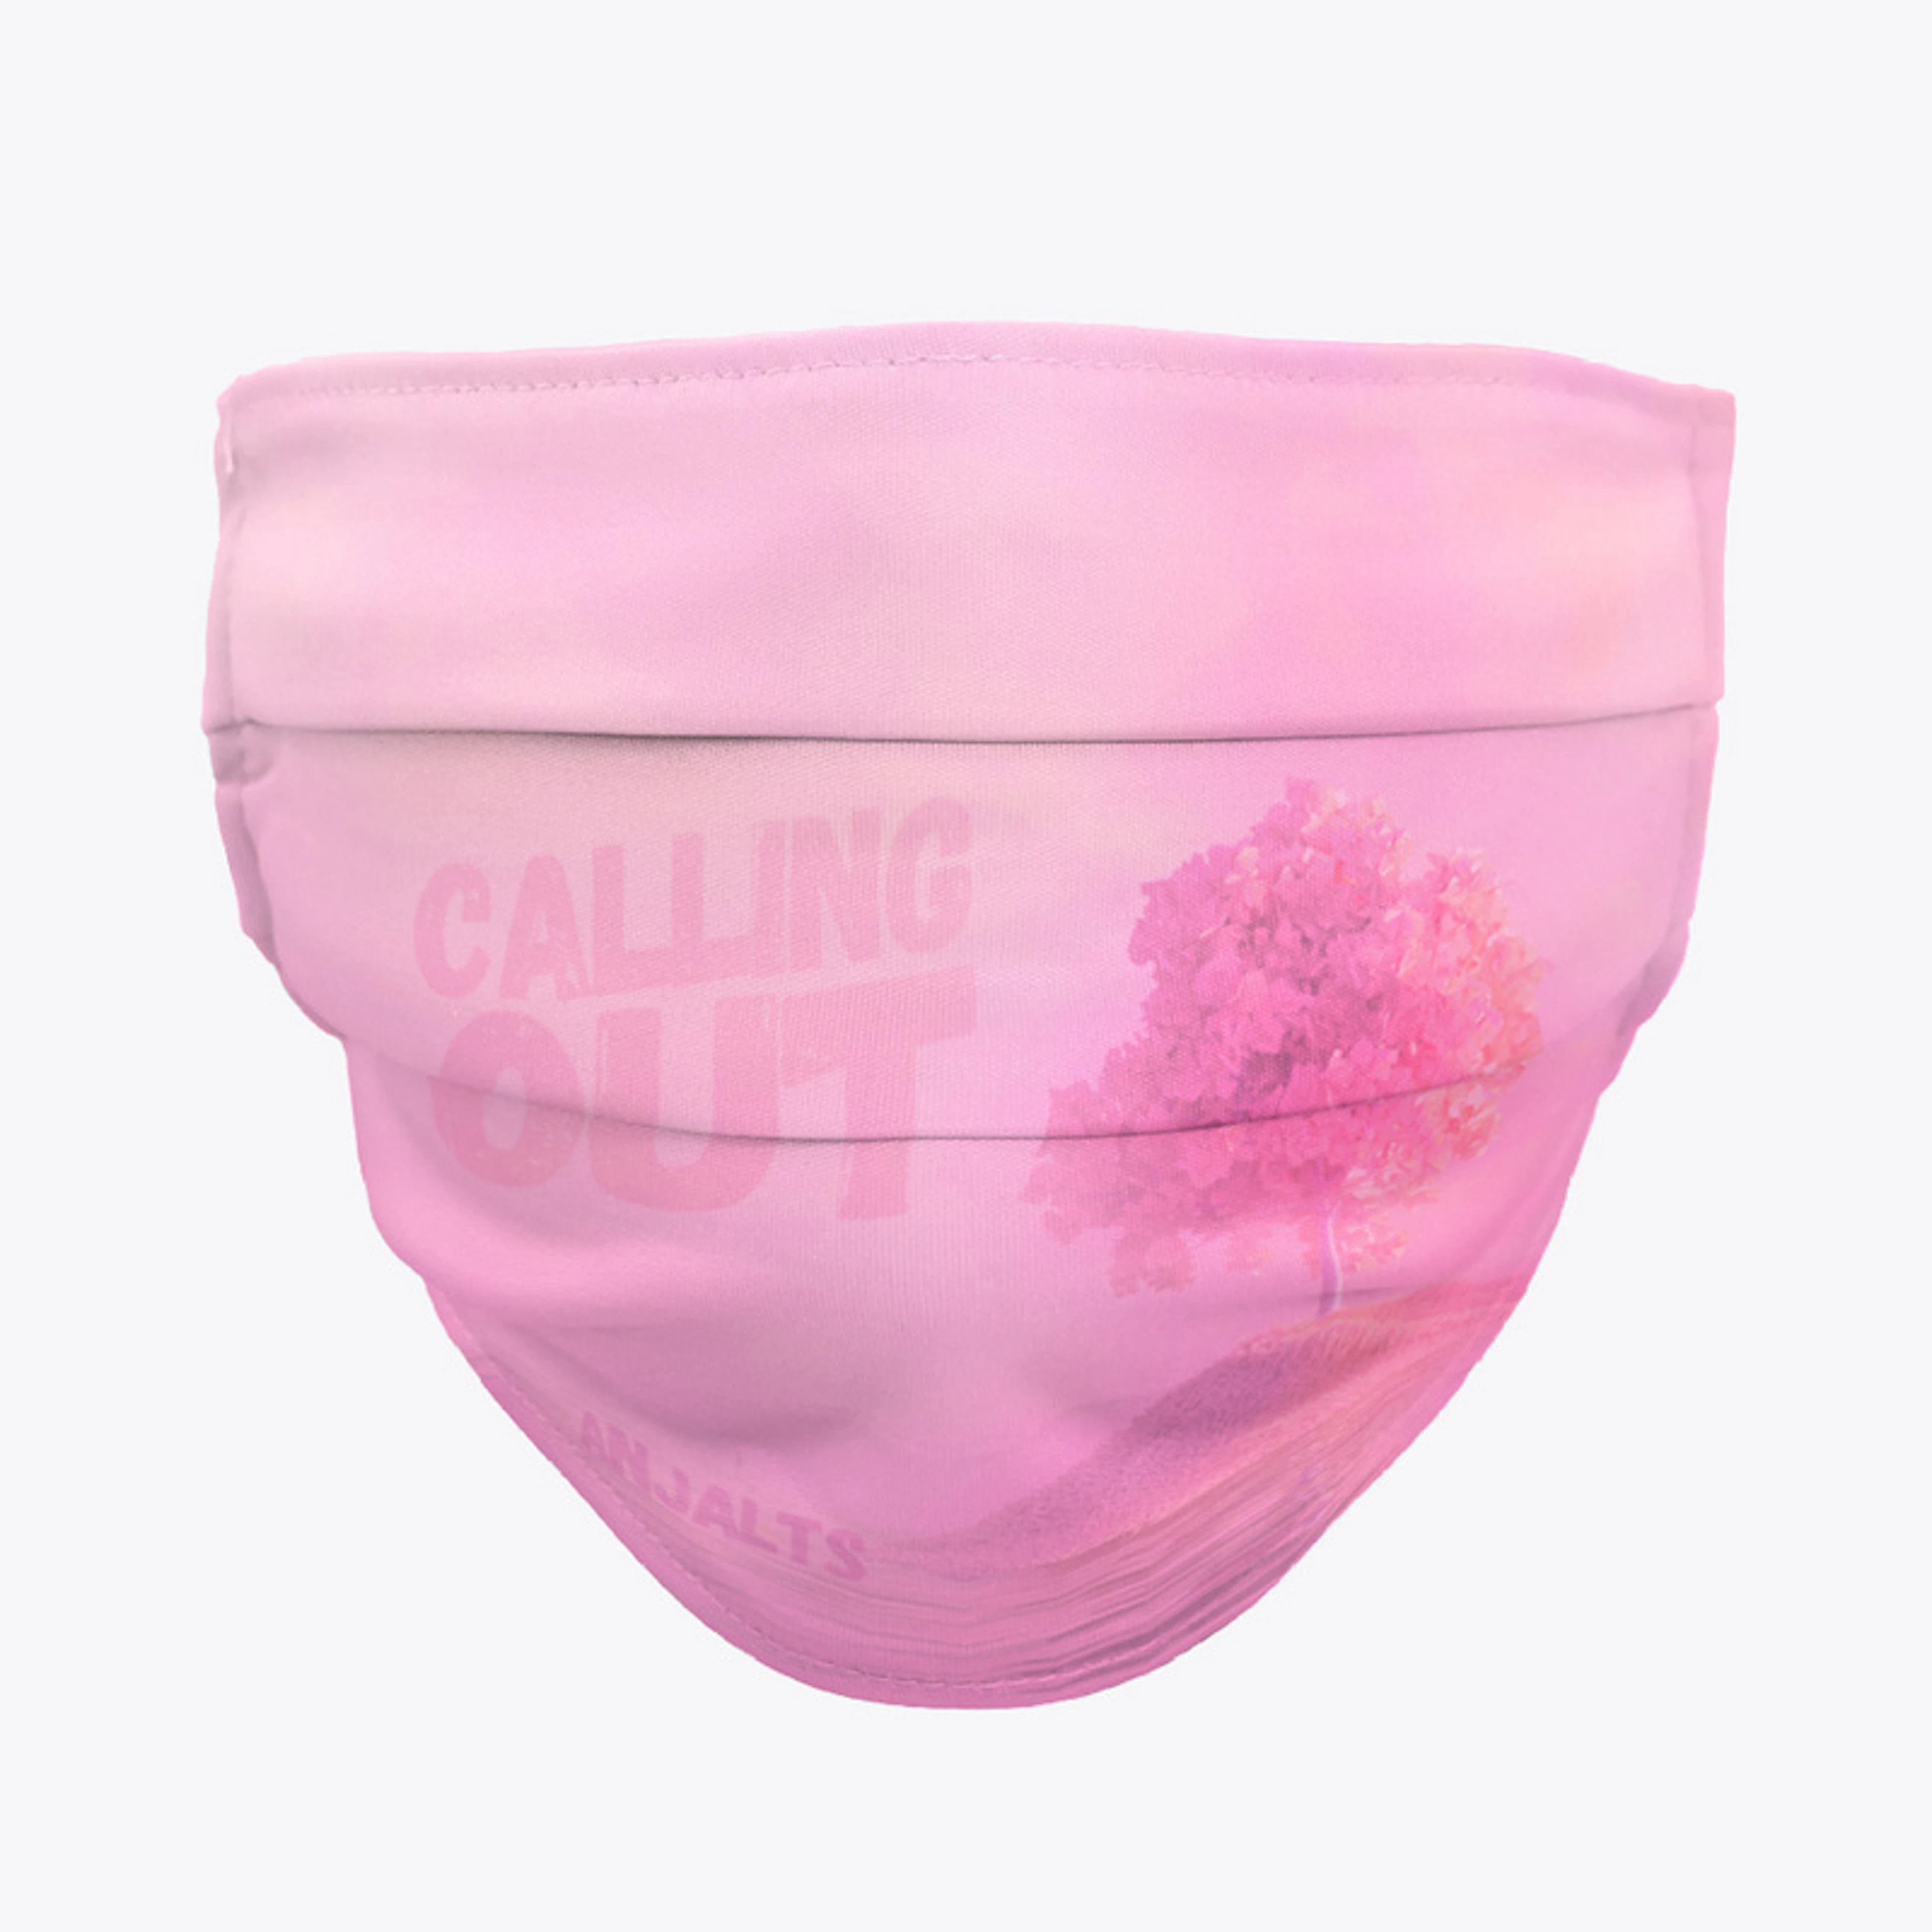 Anjalts 'Calling Out' Pink Face Masks